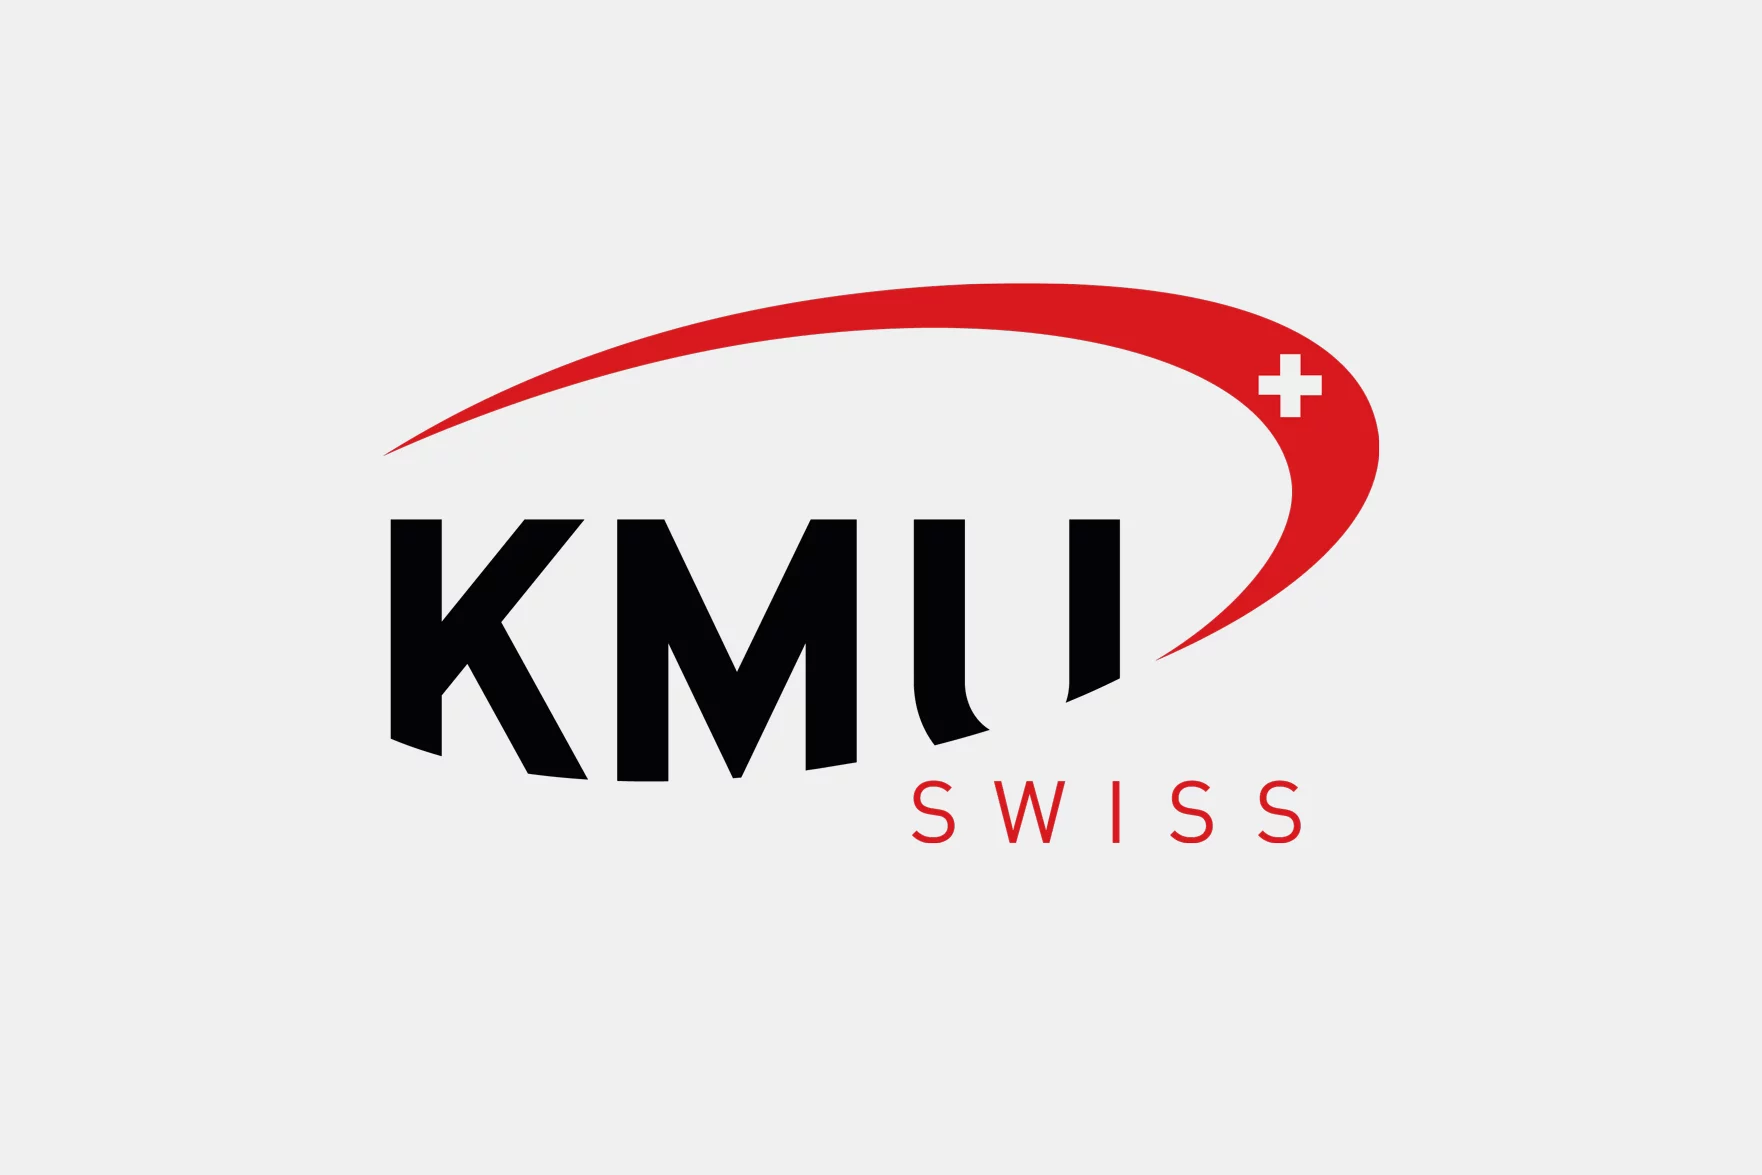 psi_kmu_swiss_symposium_logo